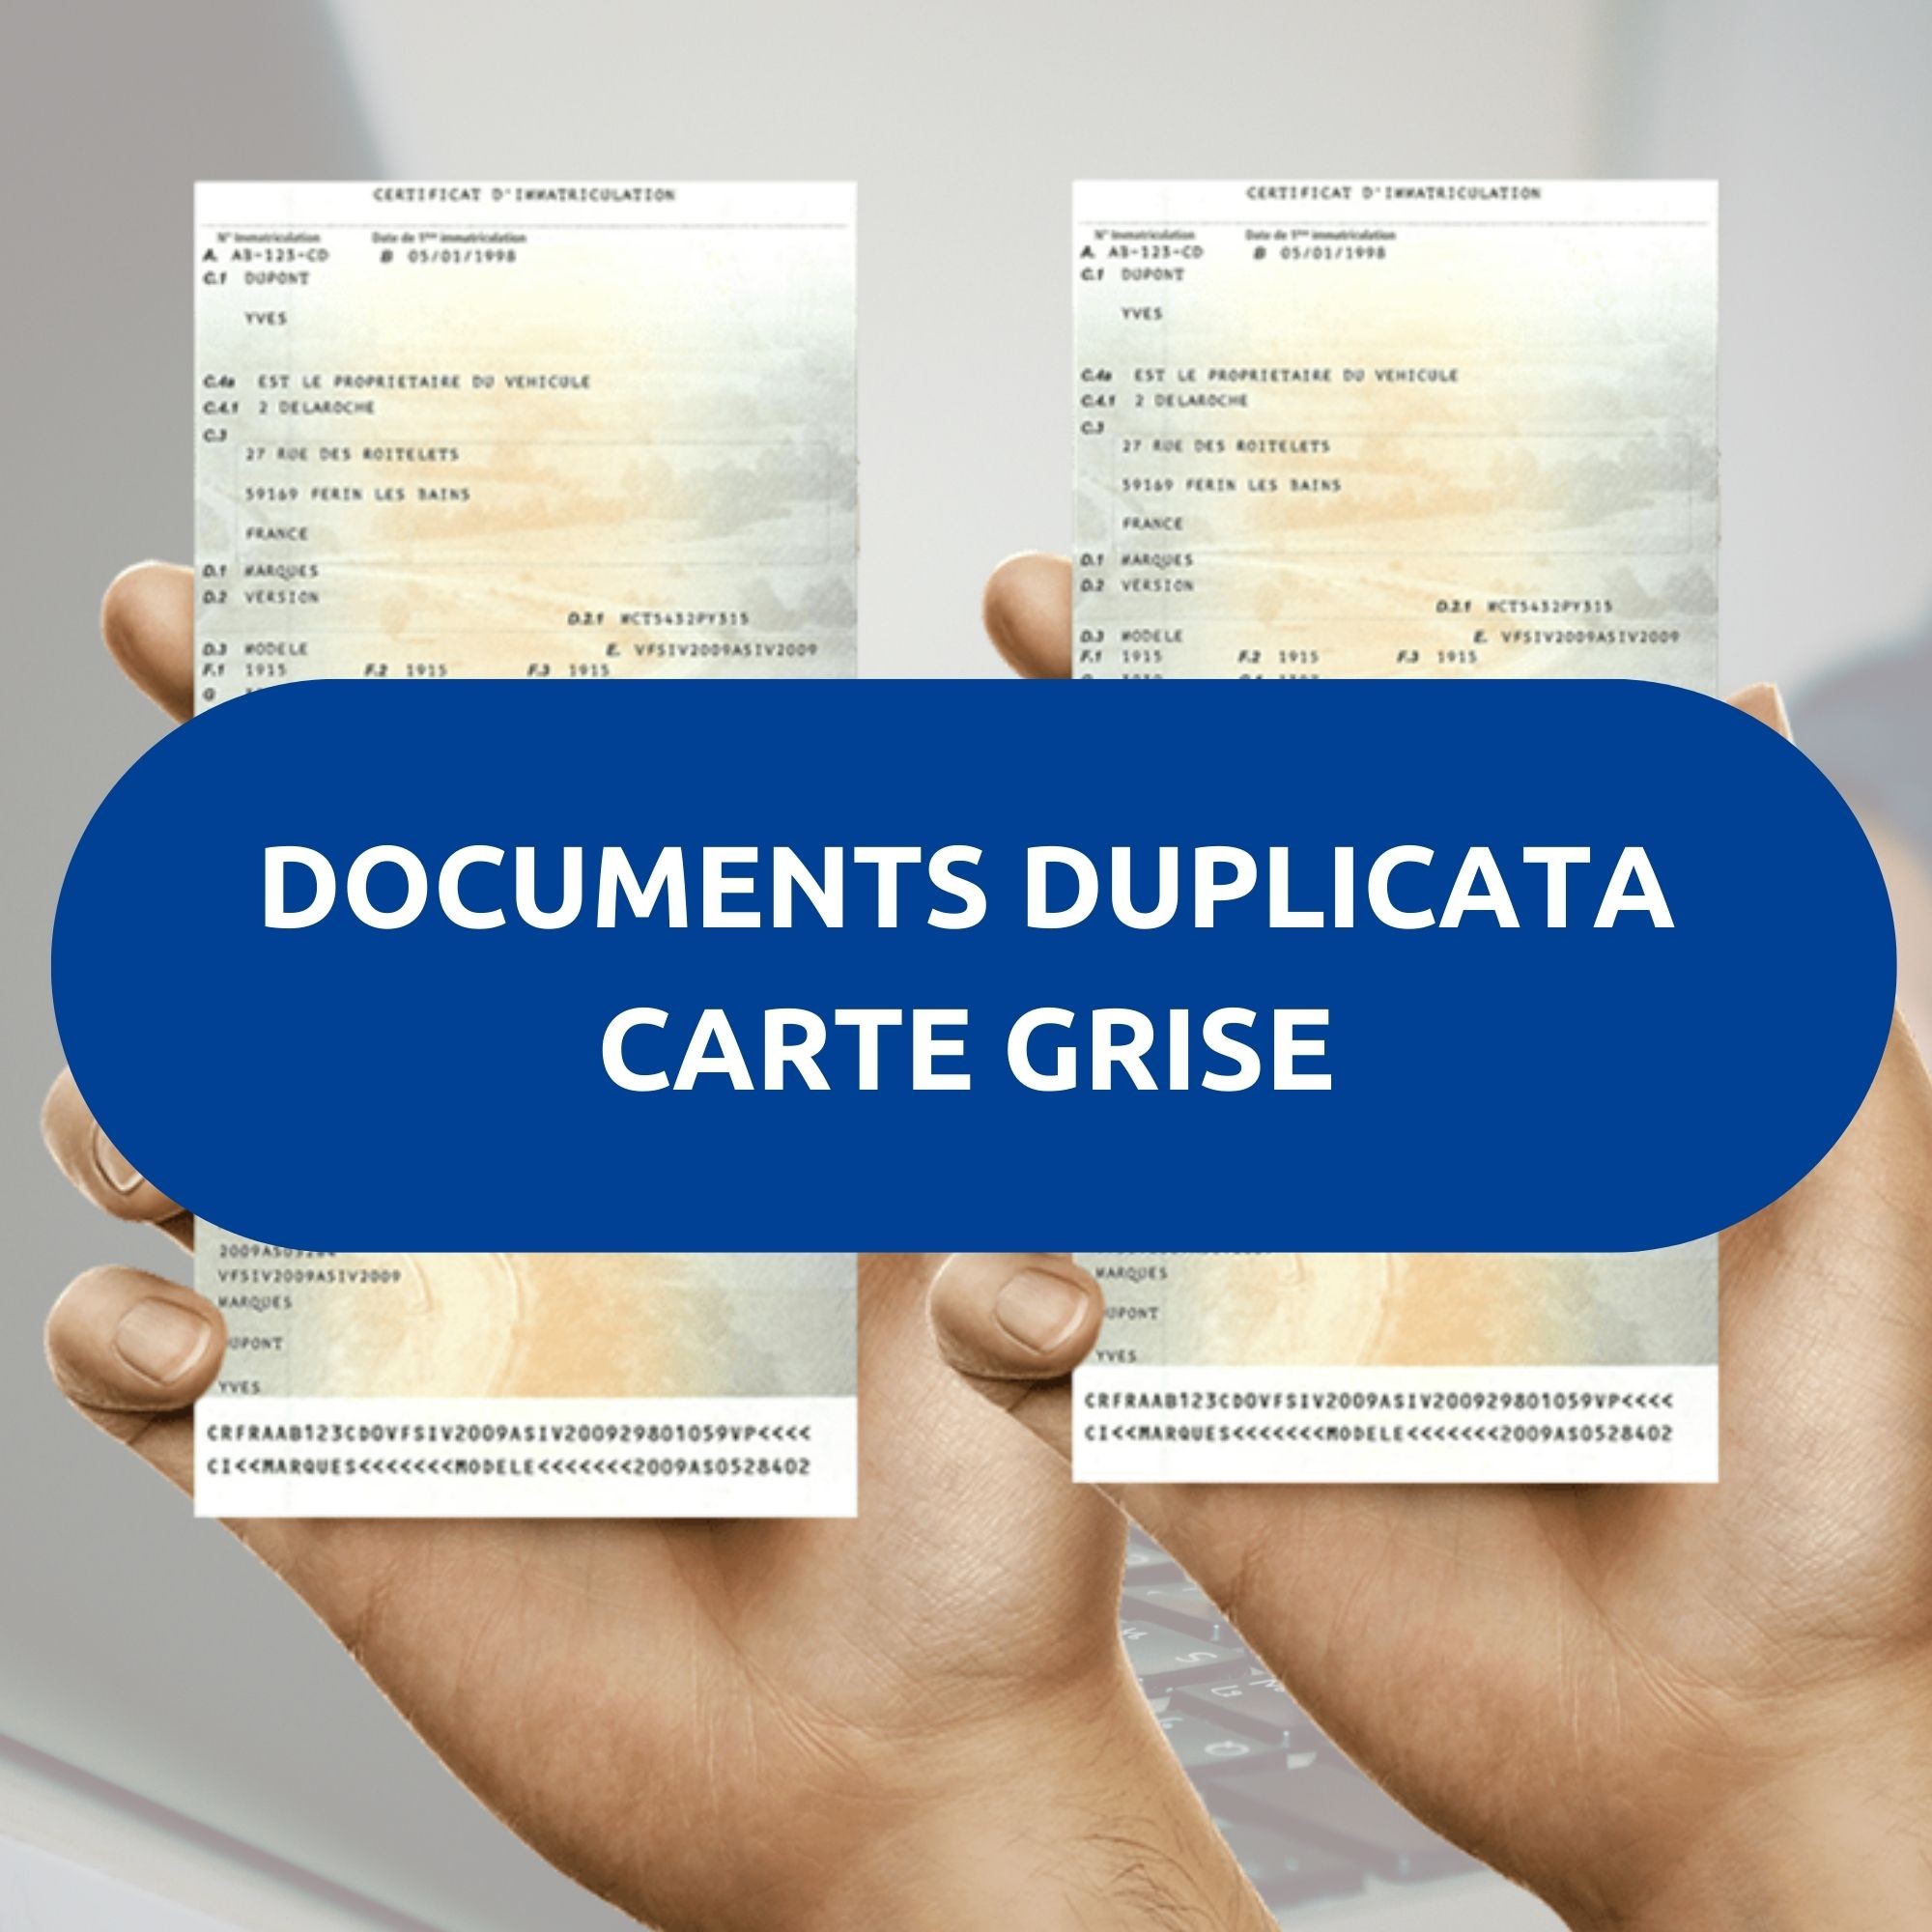 Documents perte carte grise demande duplicata